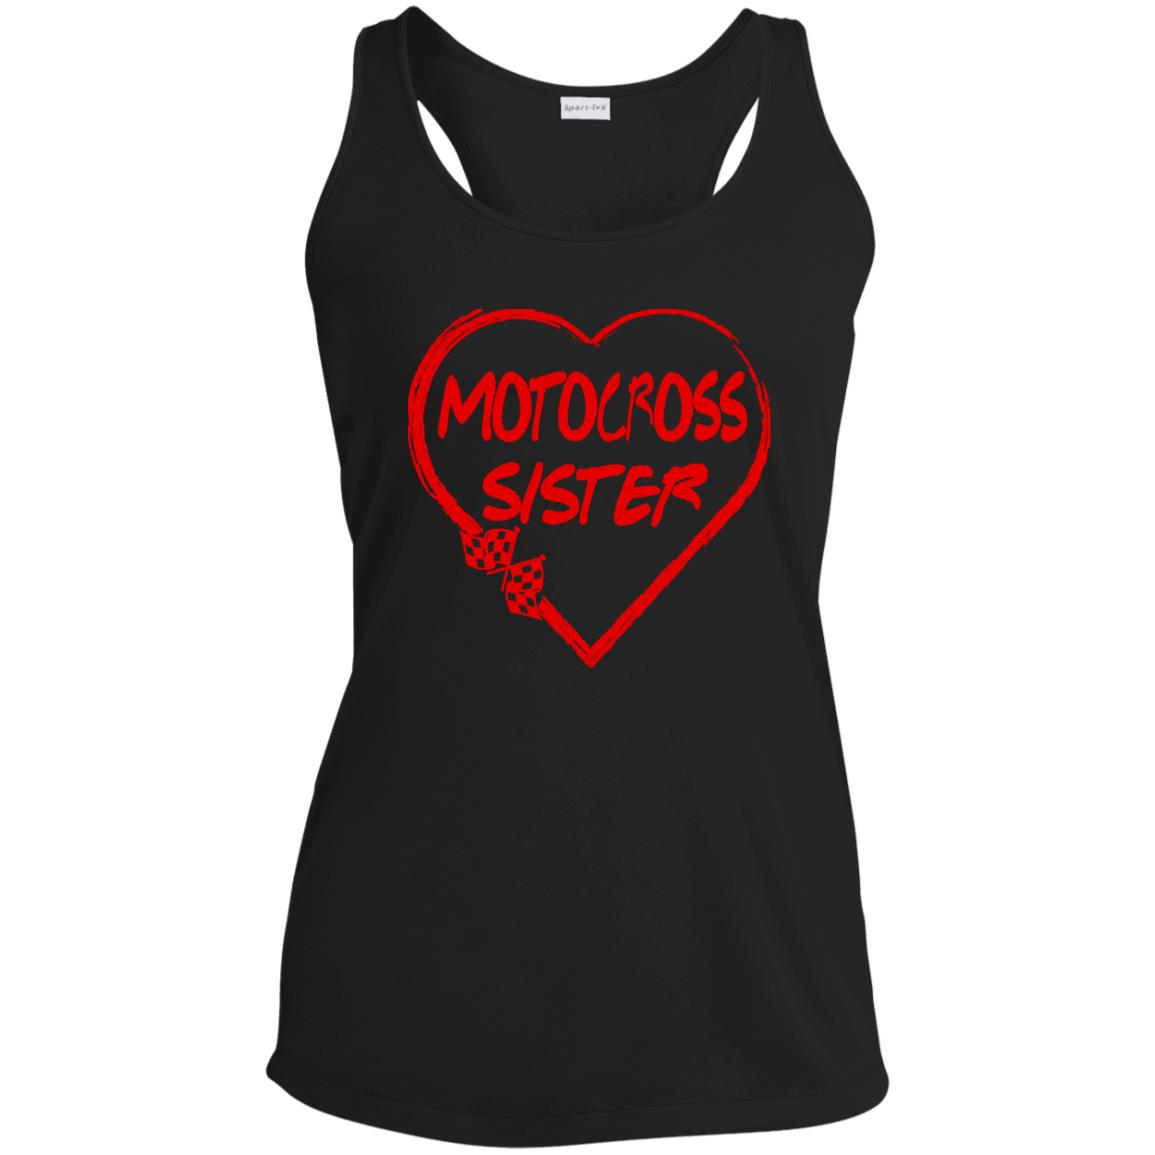 Motocross Sister Heart Ladies' Performance Racerback Tank